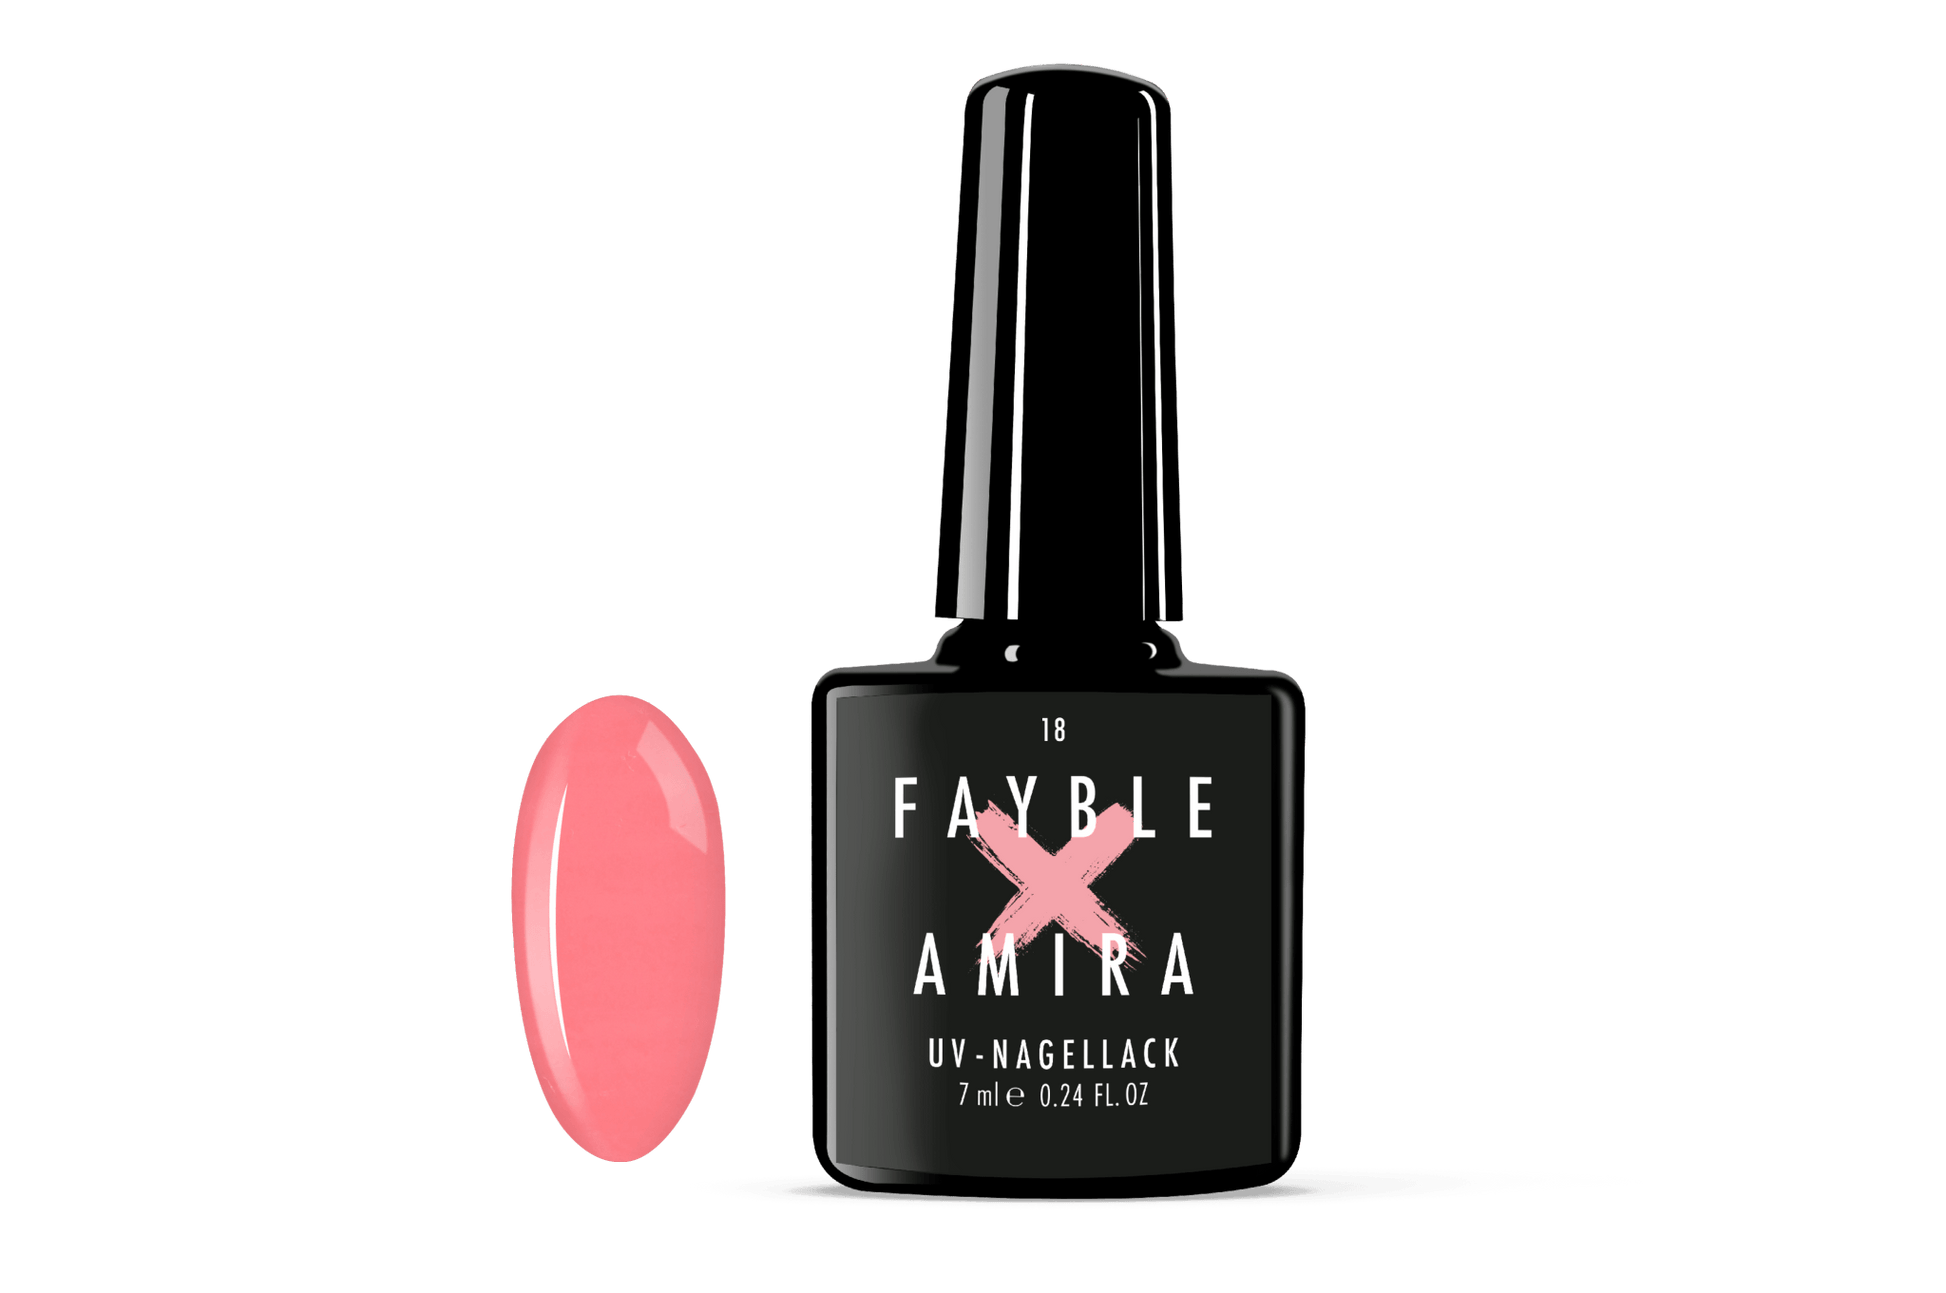 FAYBLE × AMIRA | UV-Nagellack 18 - FAYBLE